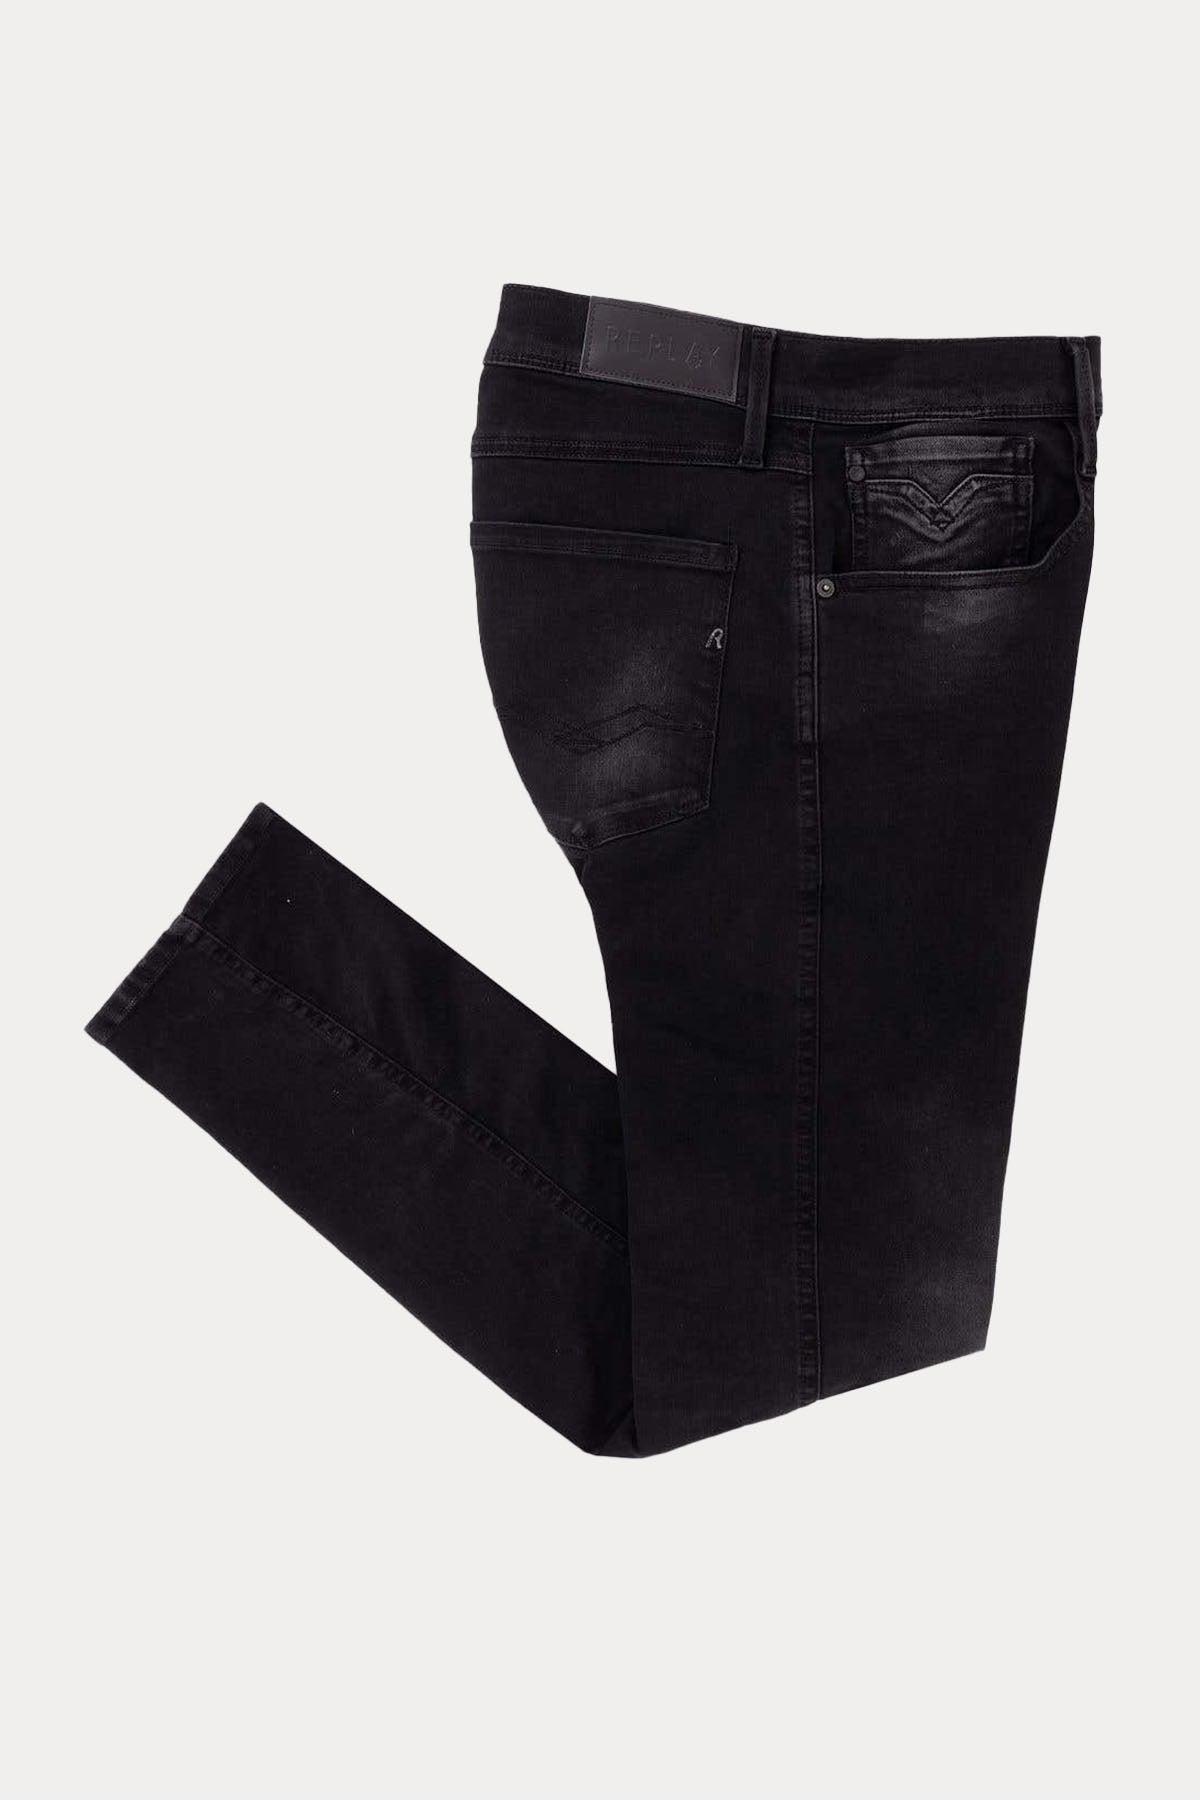 Replay Anbass Hyperflex Slim Fit Jeans-Libas Trendy Fashion Store